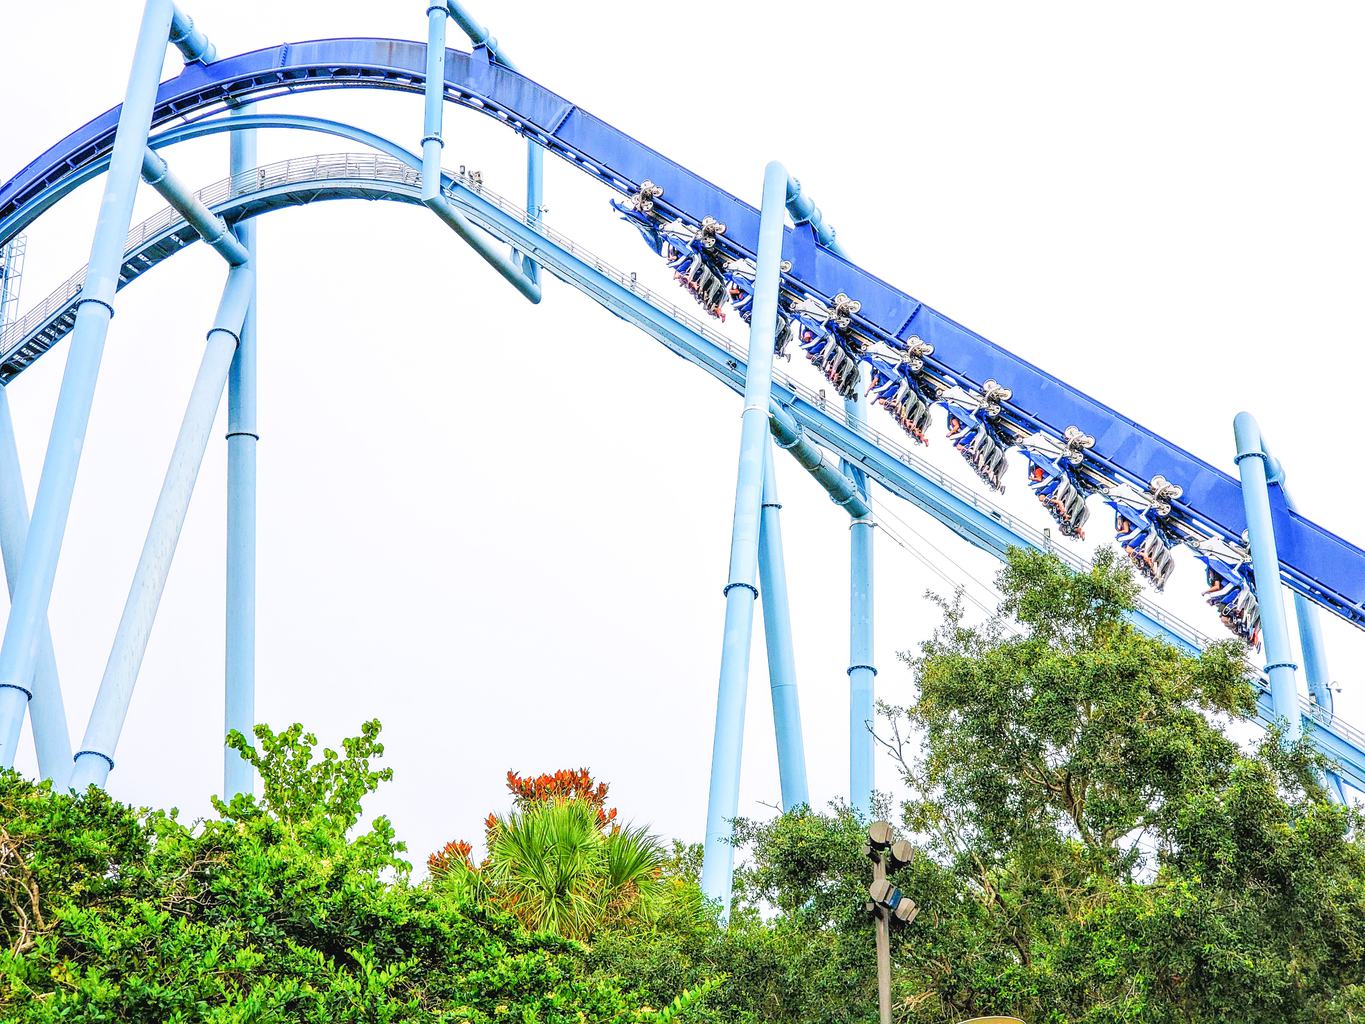 manta flying roller coaster at sea world in Orlando